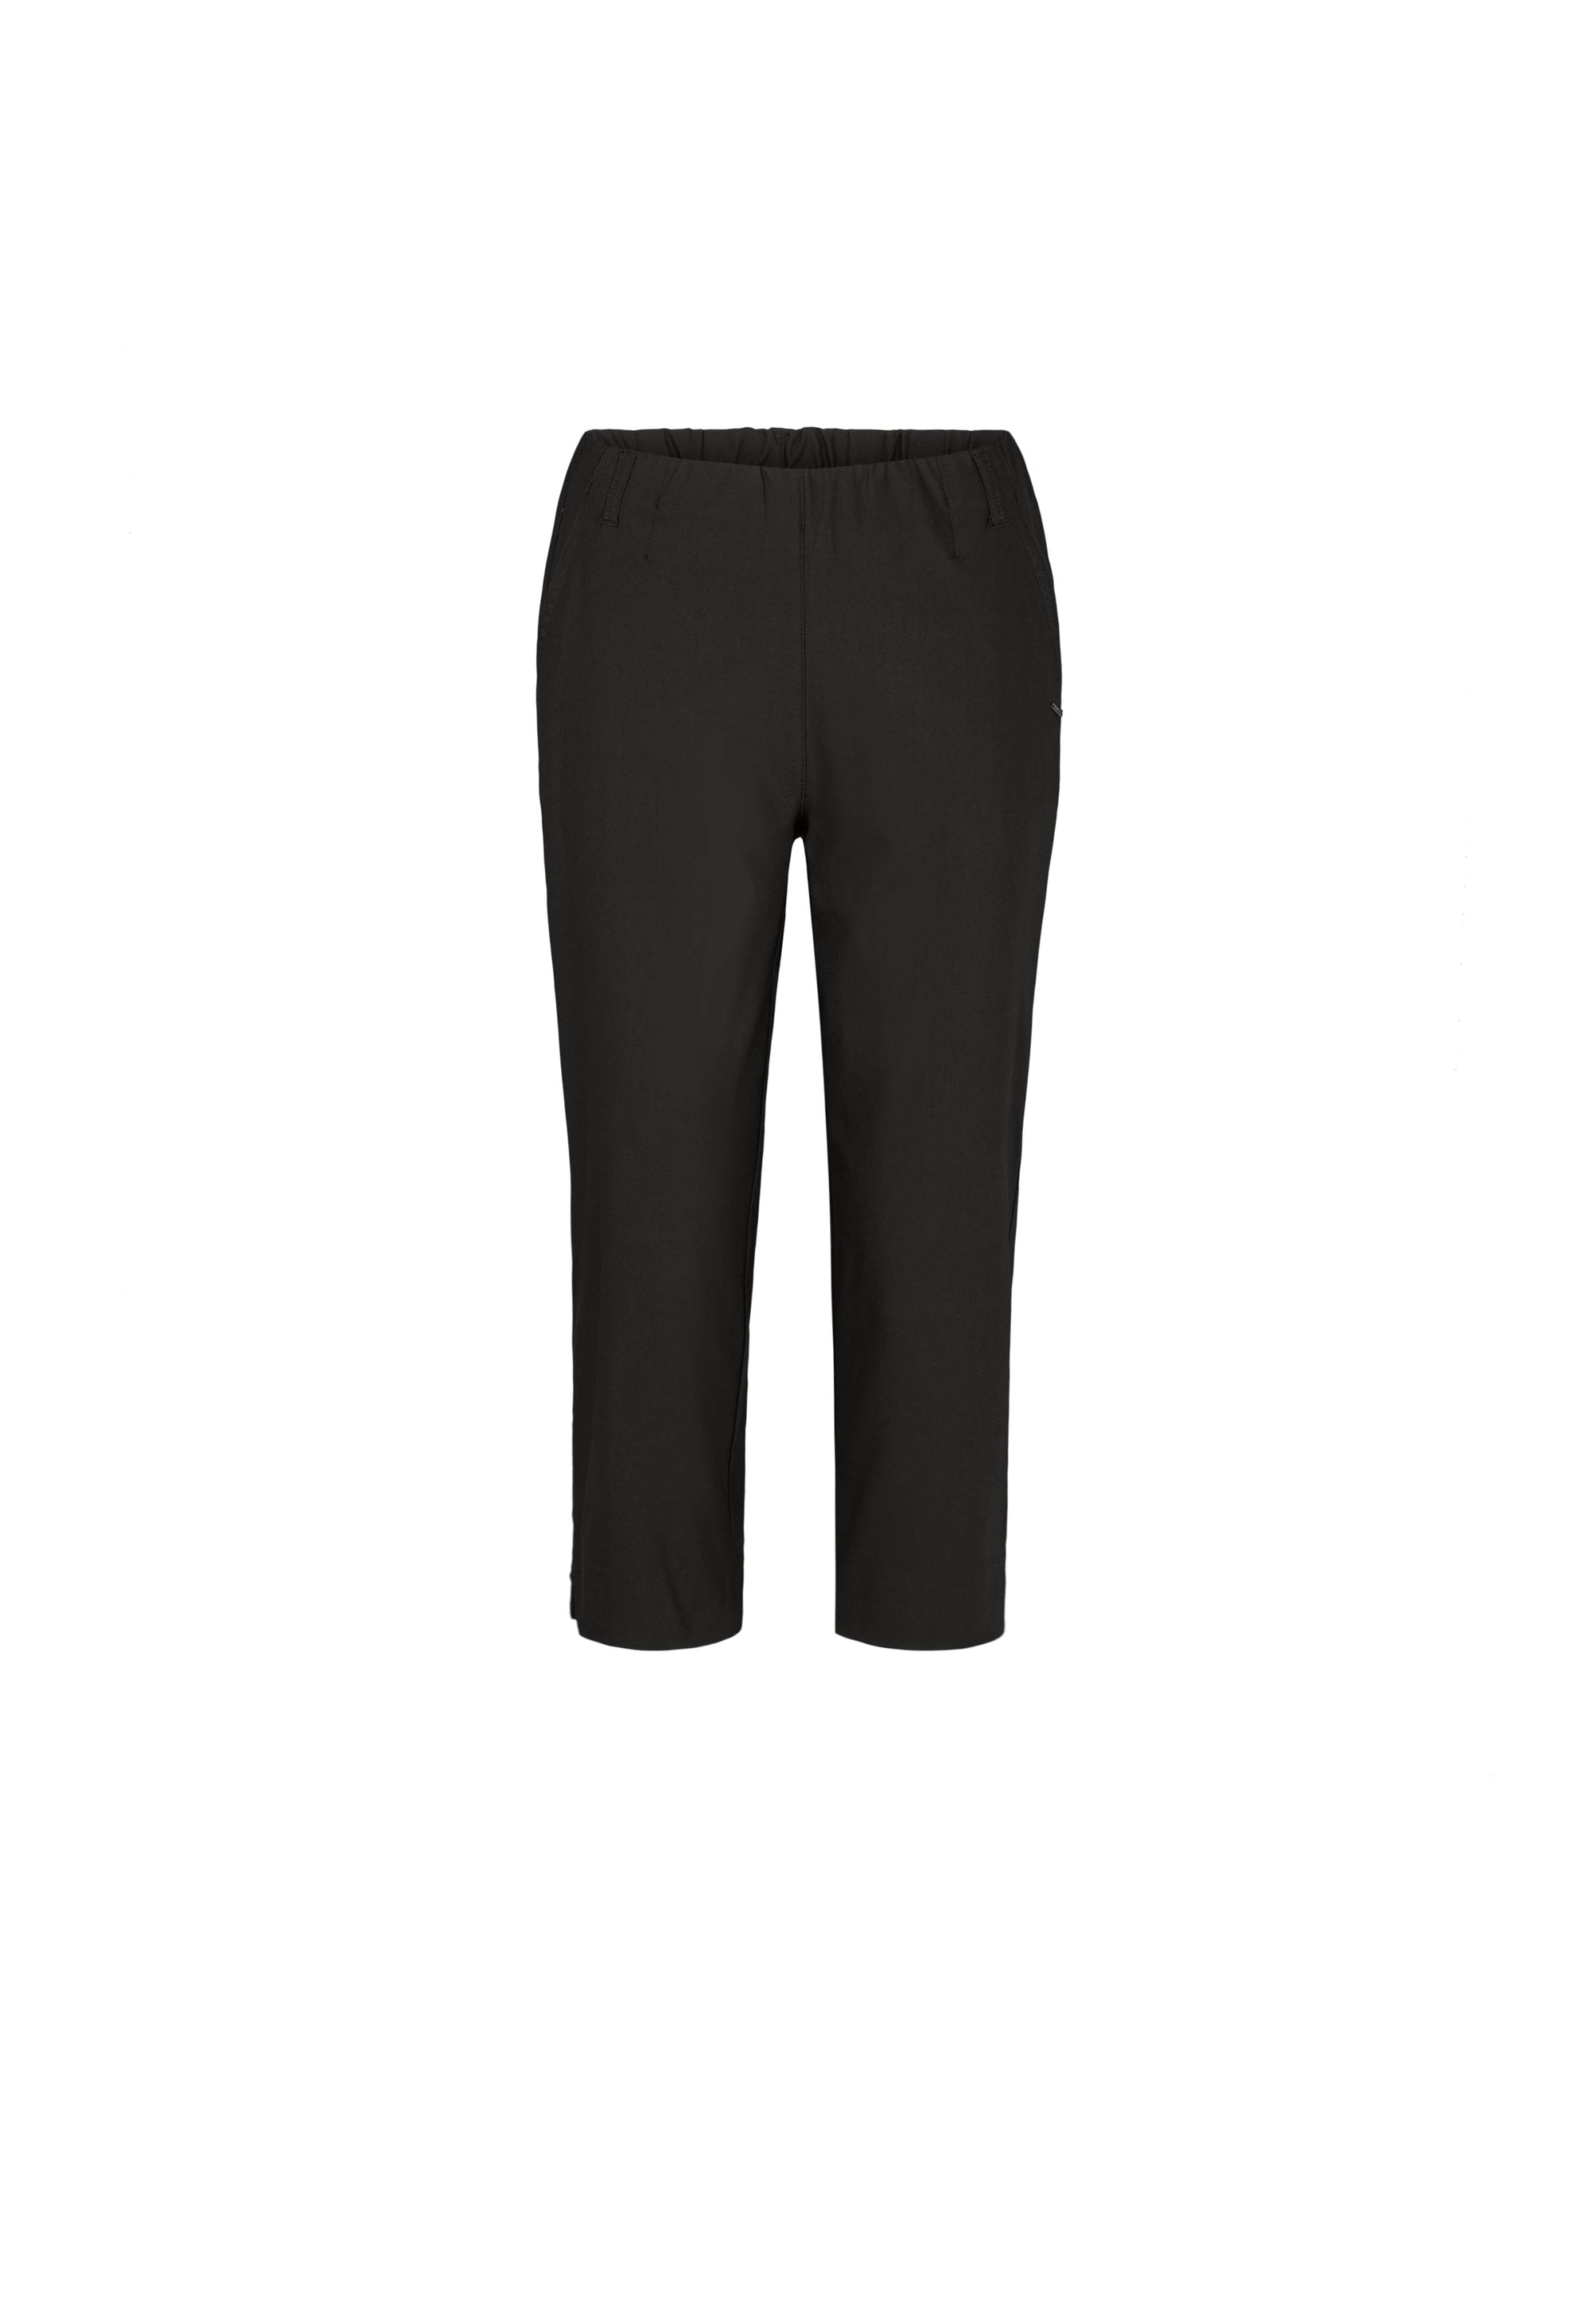 LAURIE Taylor Regular Capri Medium Length Trousers REGULAR 99000 Black